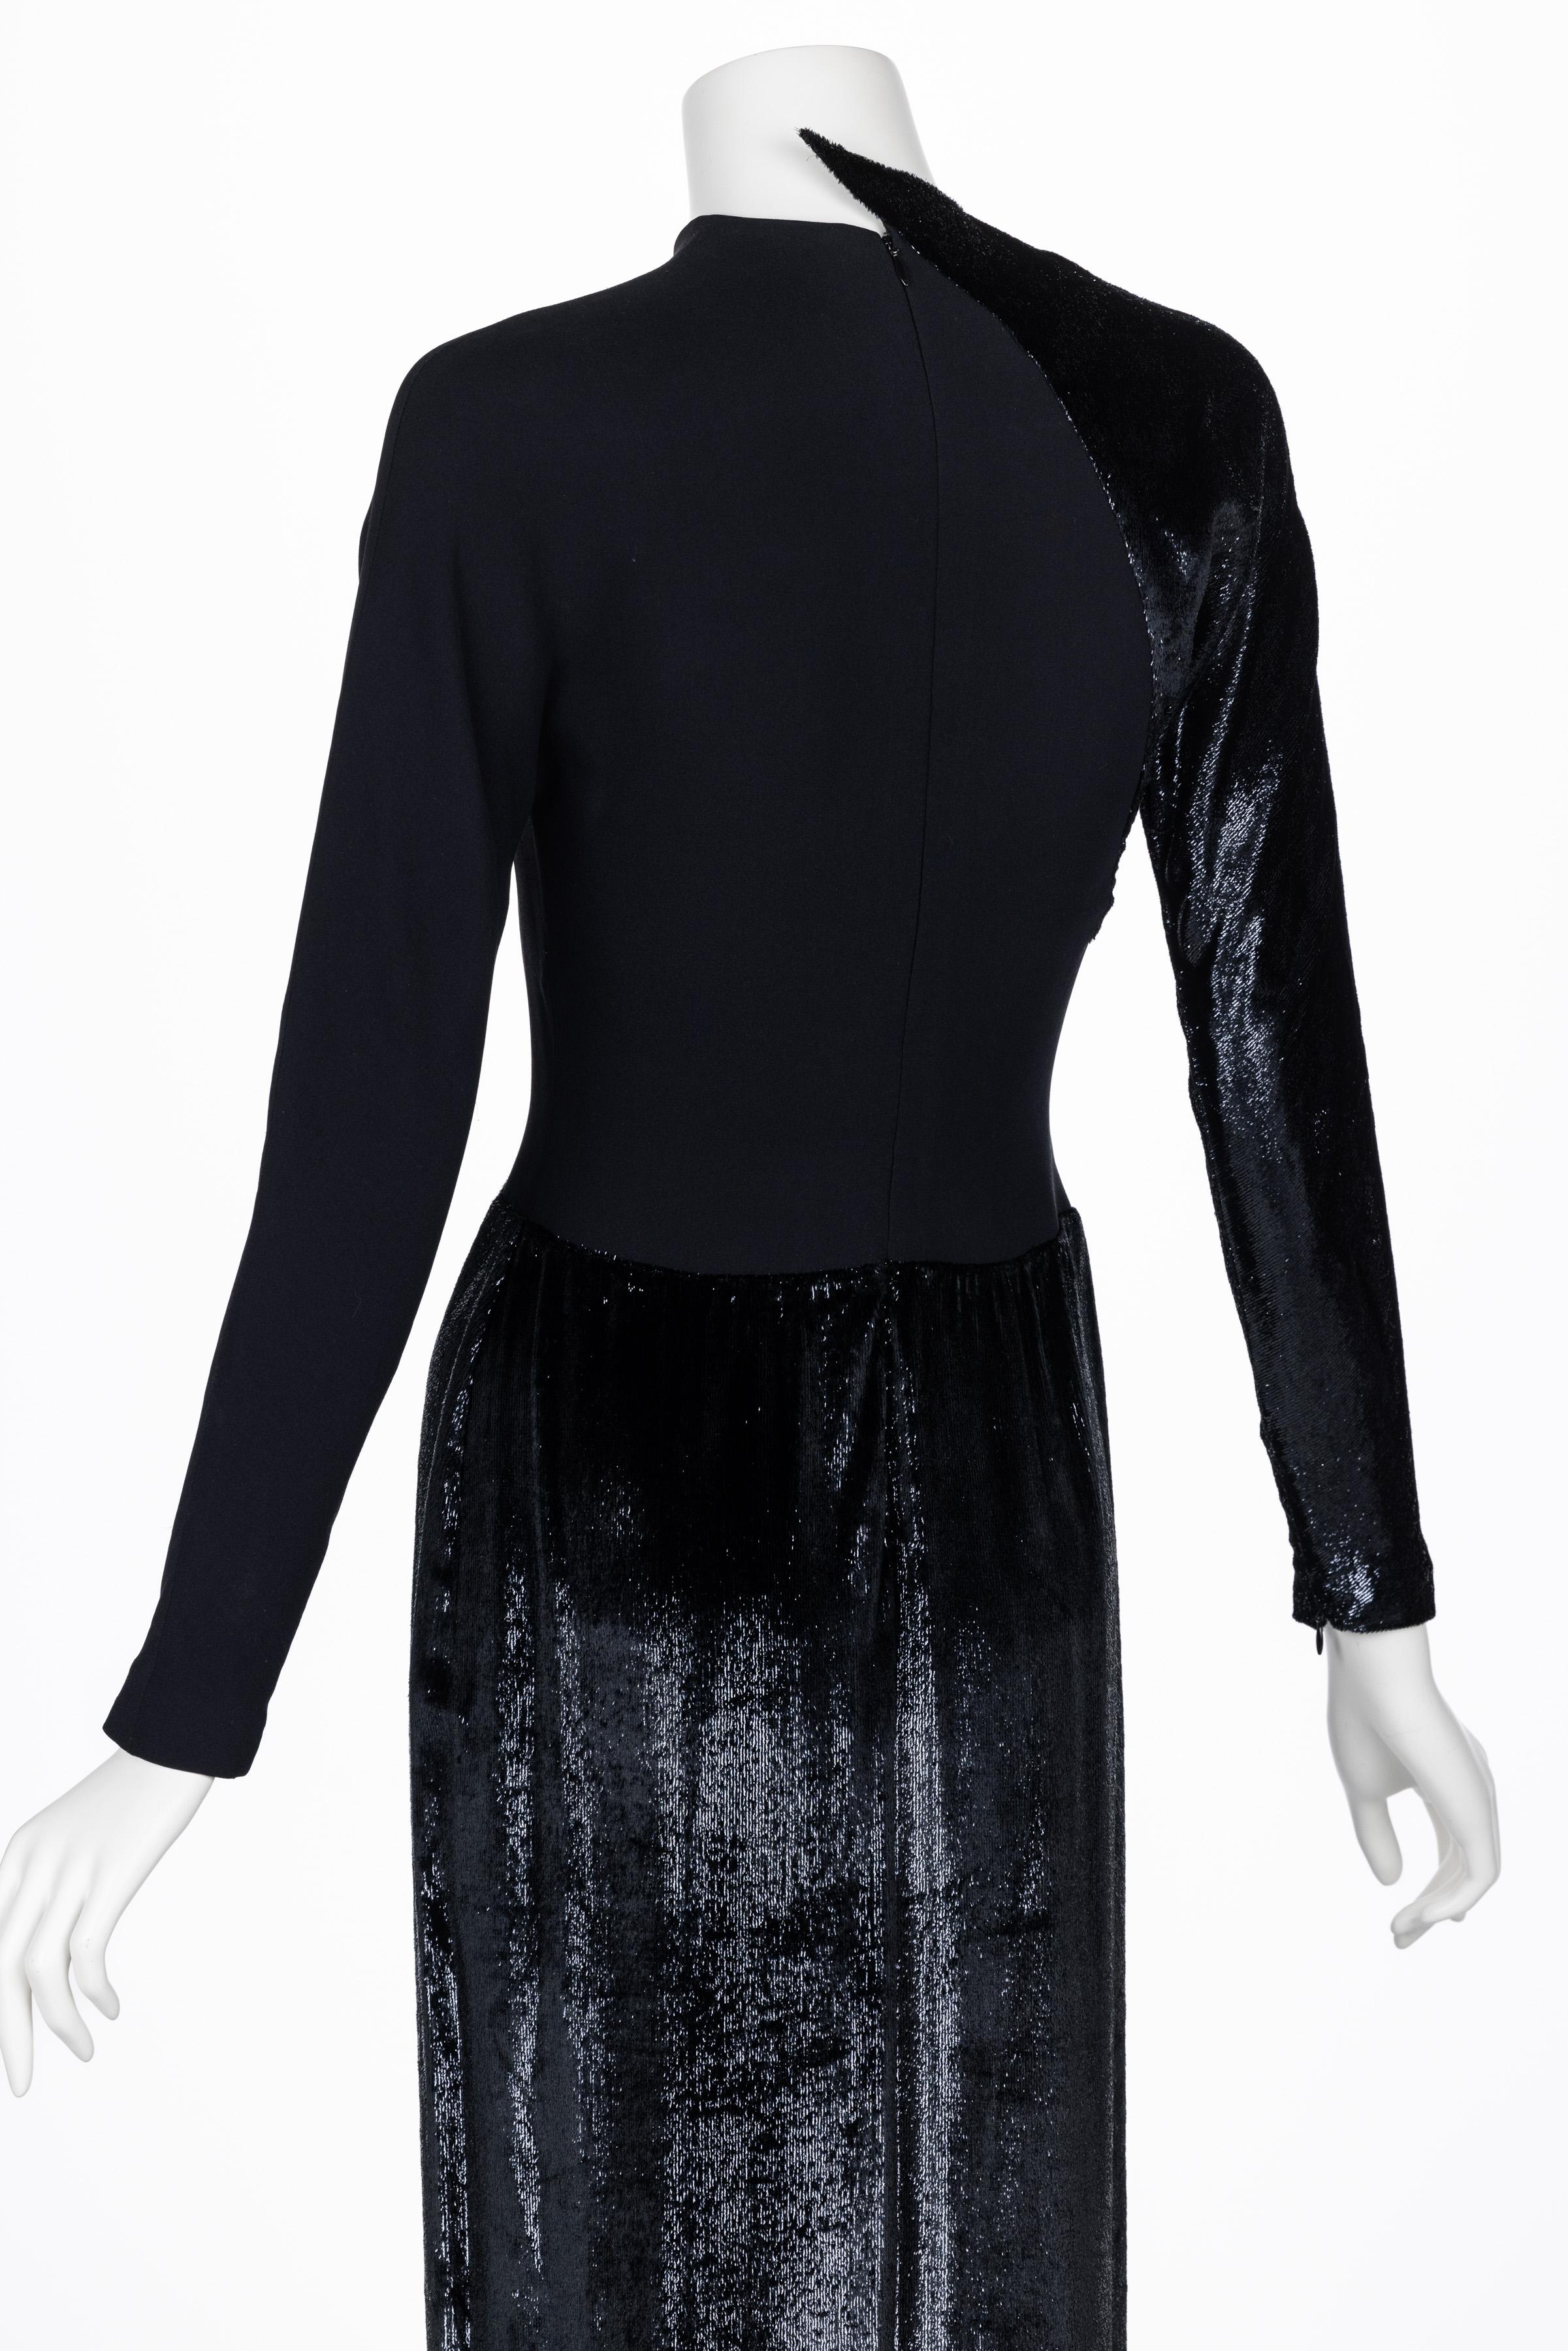 Geoffrey Beene Black Crepe Panne Velvet Dress 1990s For Sale 7